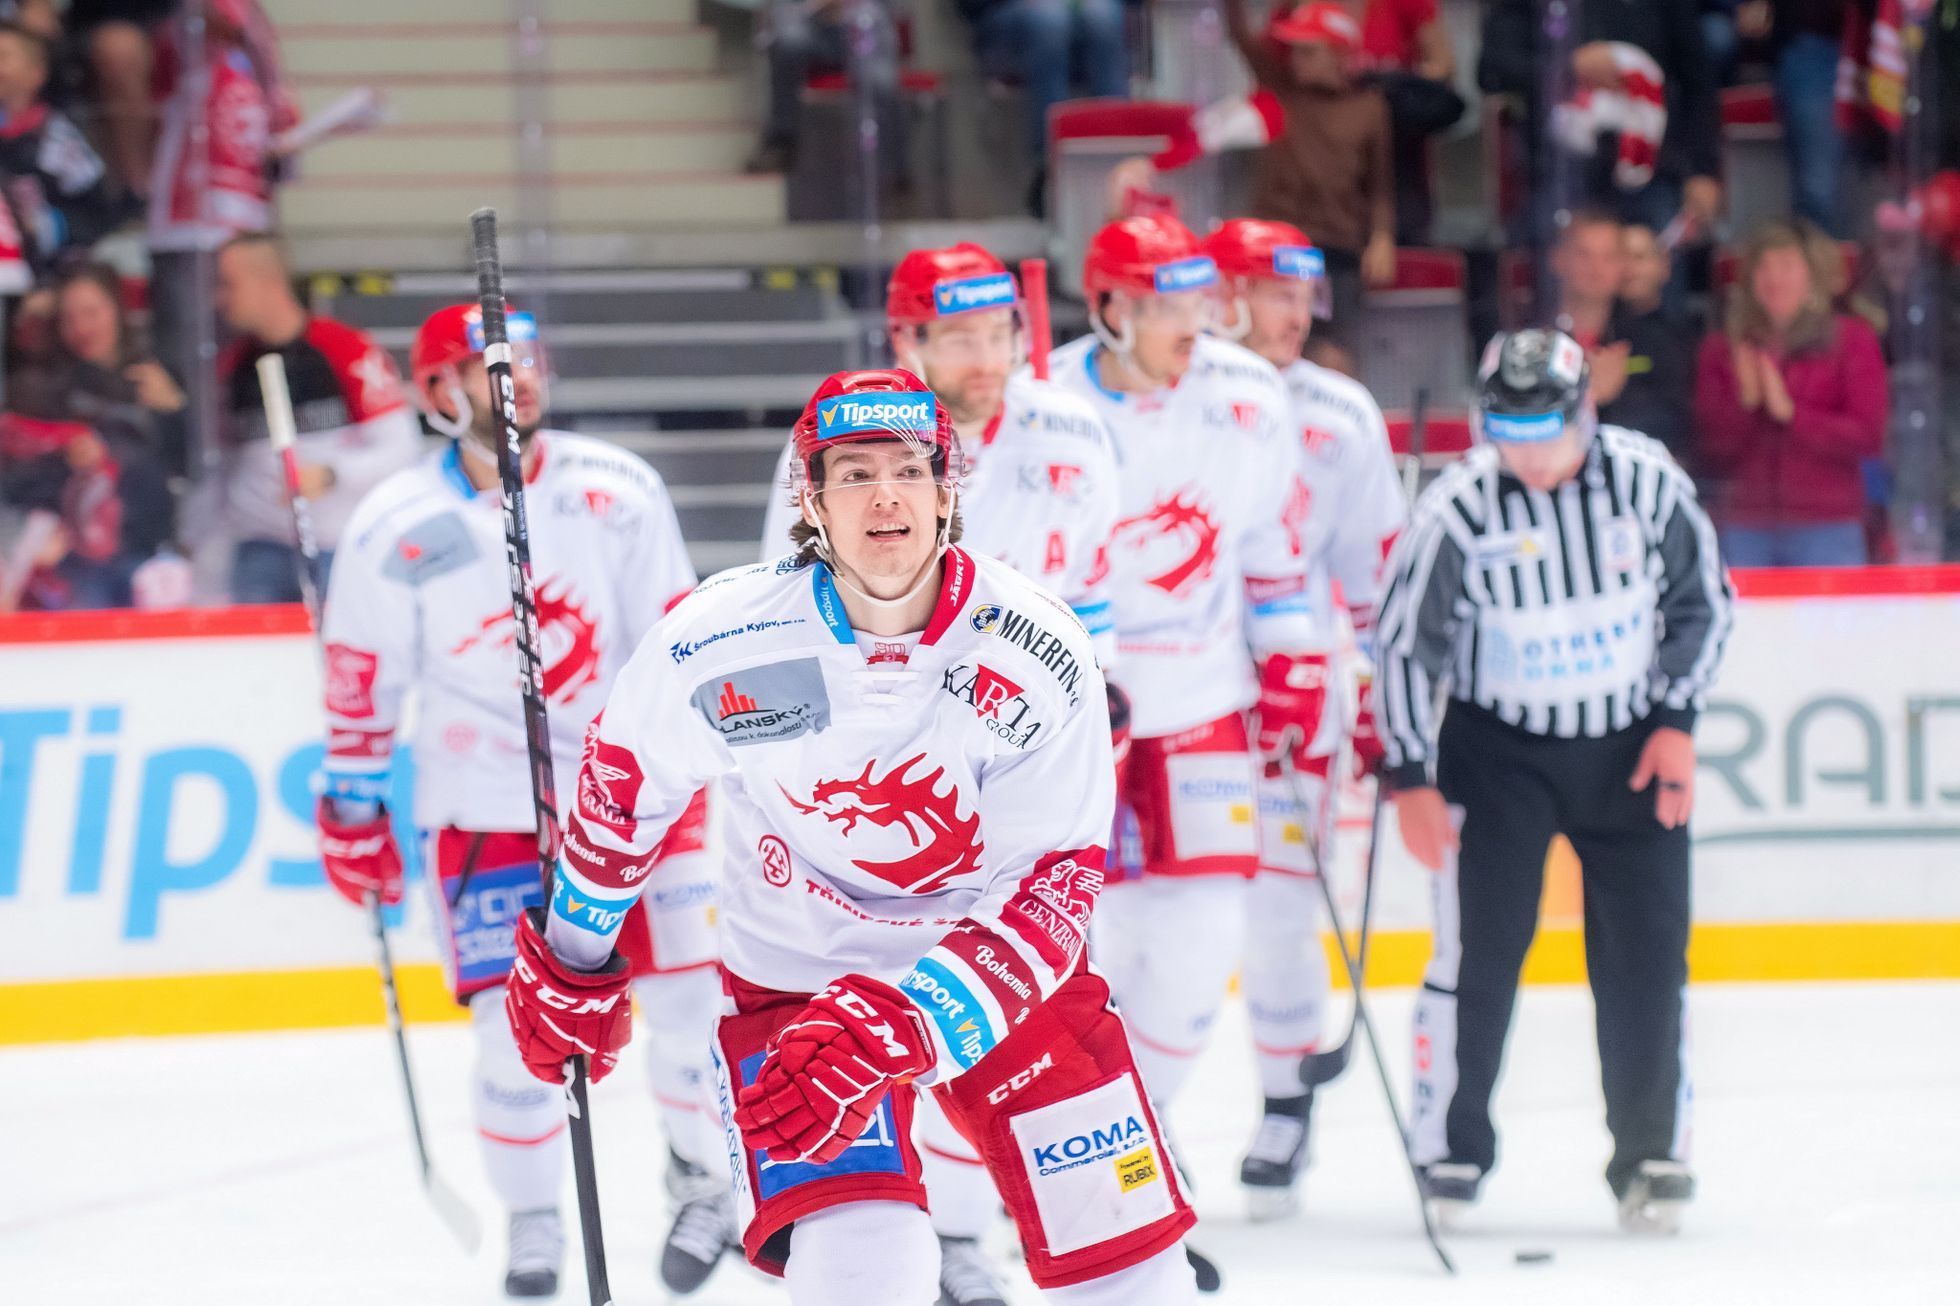 Hokejová Tipsport extraliga 2019/20, Třinec - Liberec: Michal Kovařčík